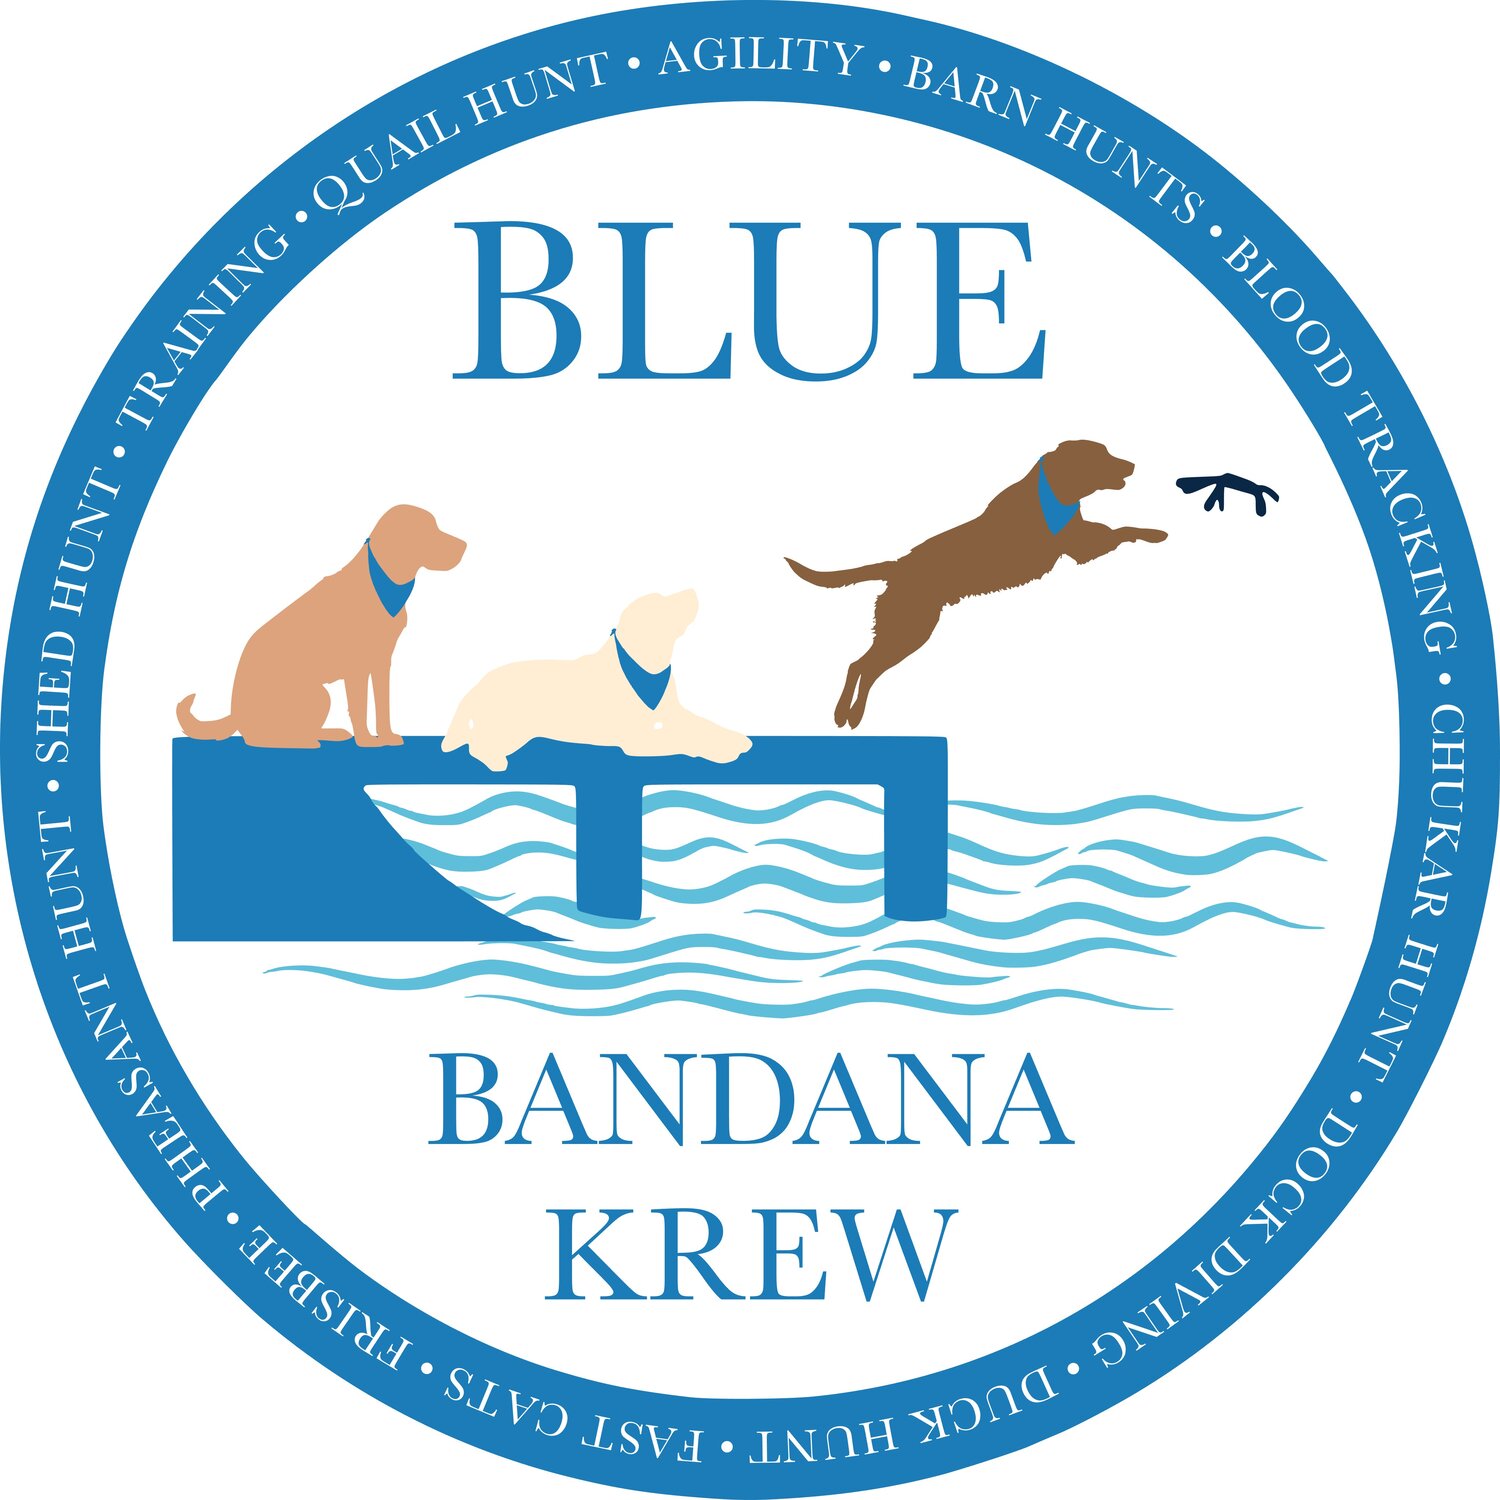 Blue Bandana Retreivers